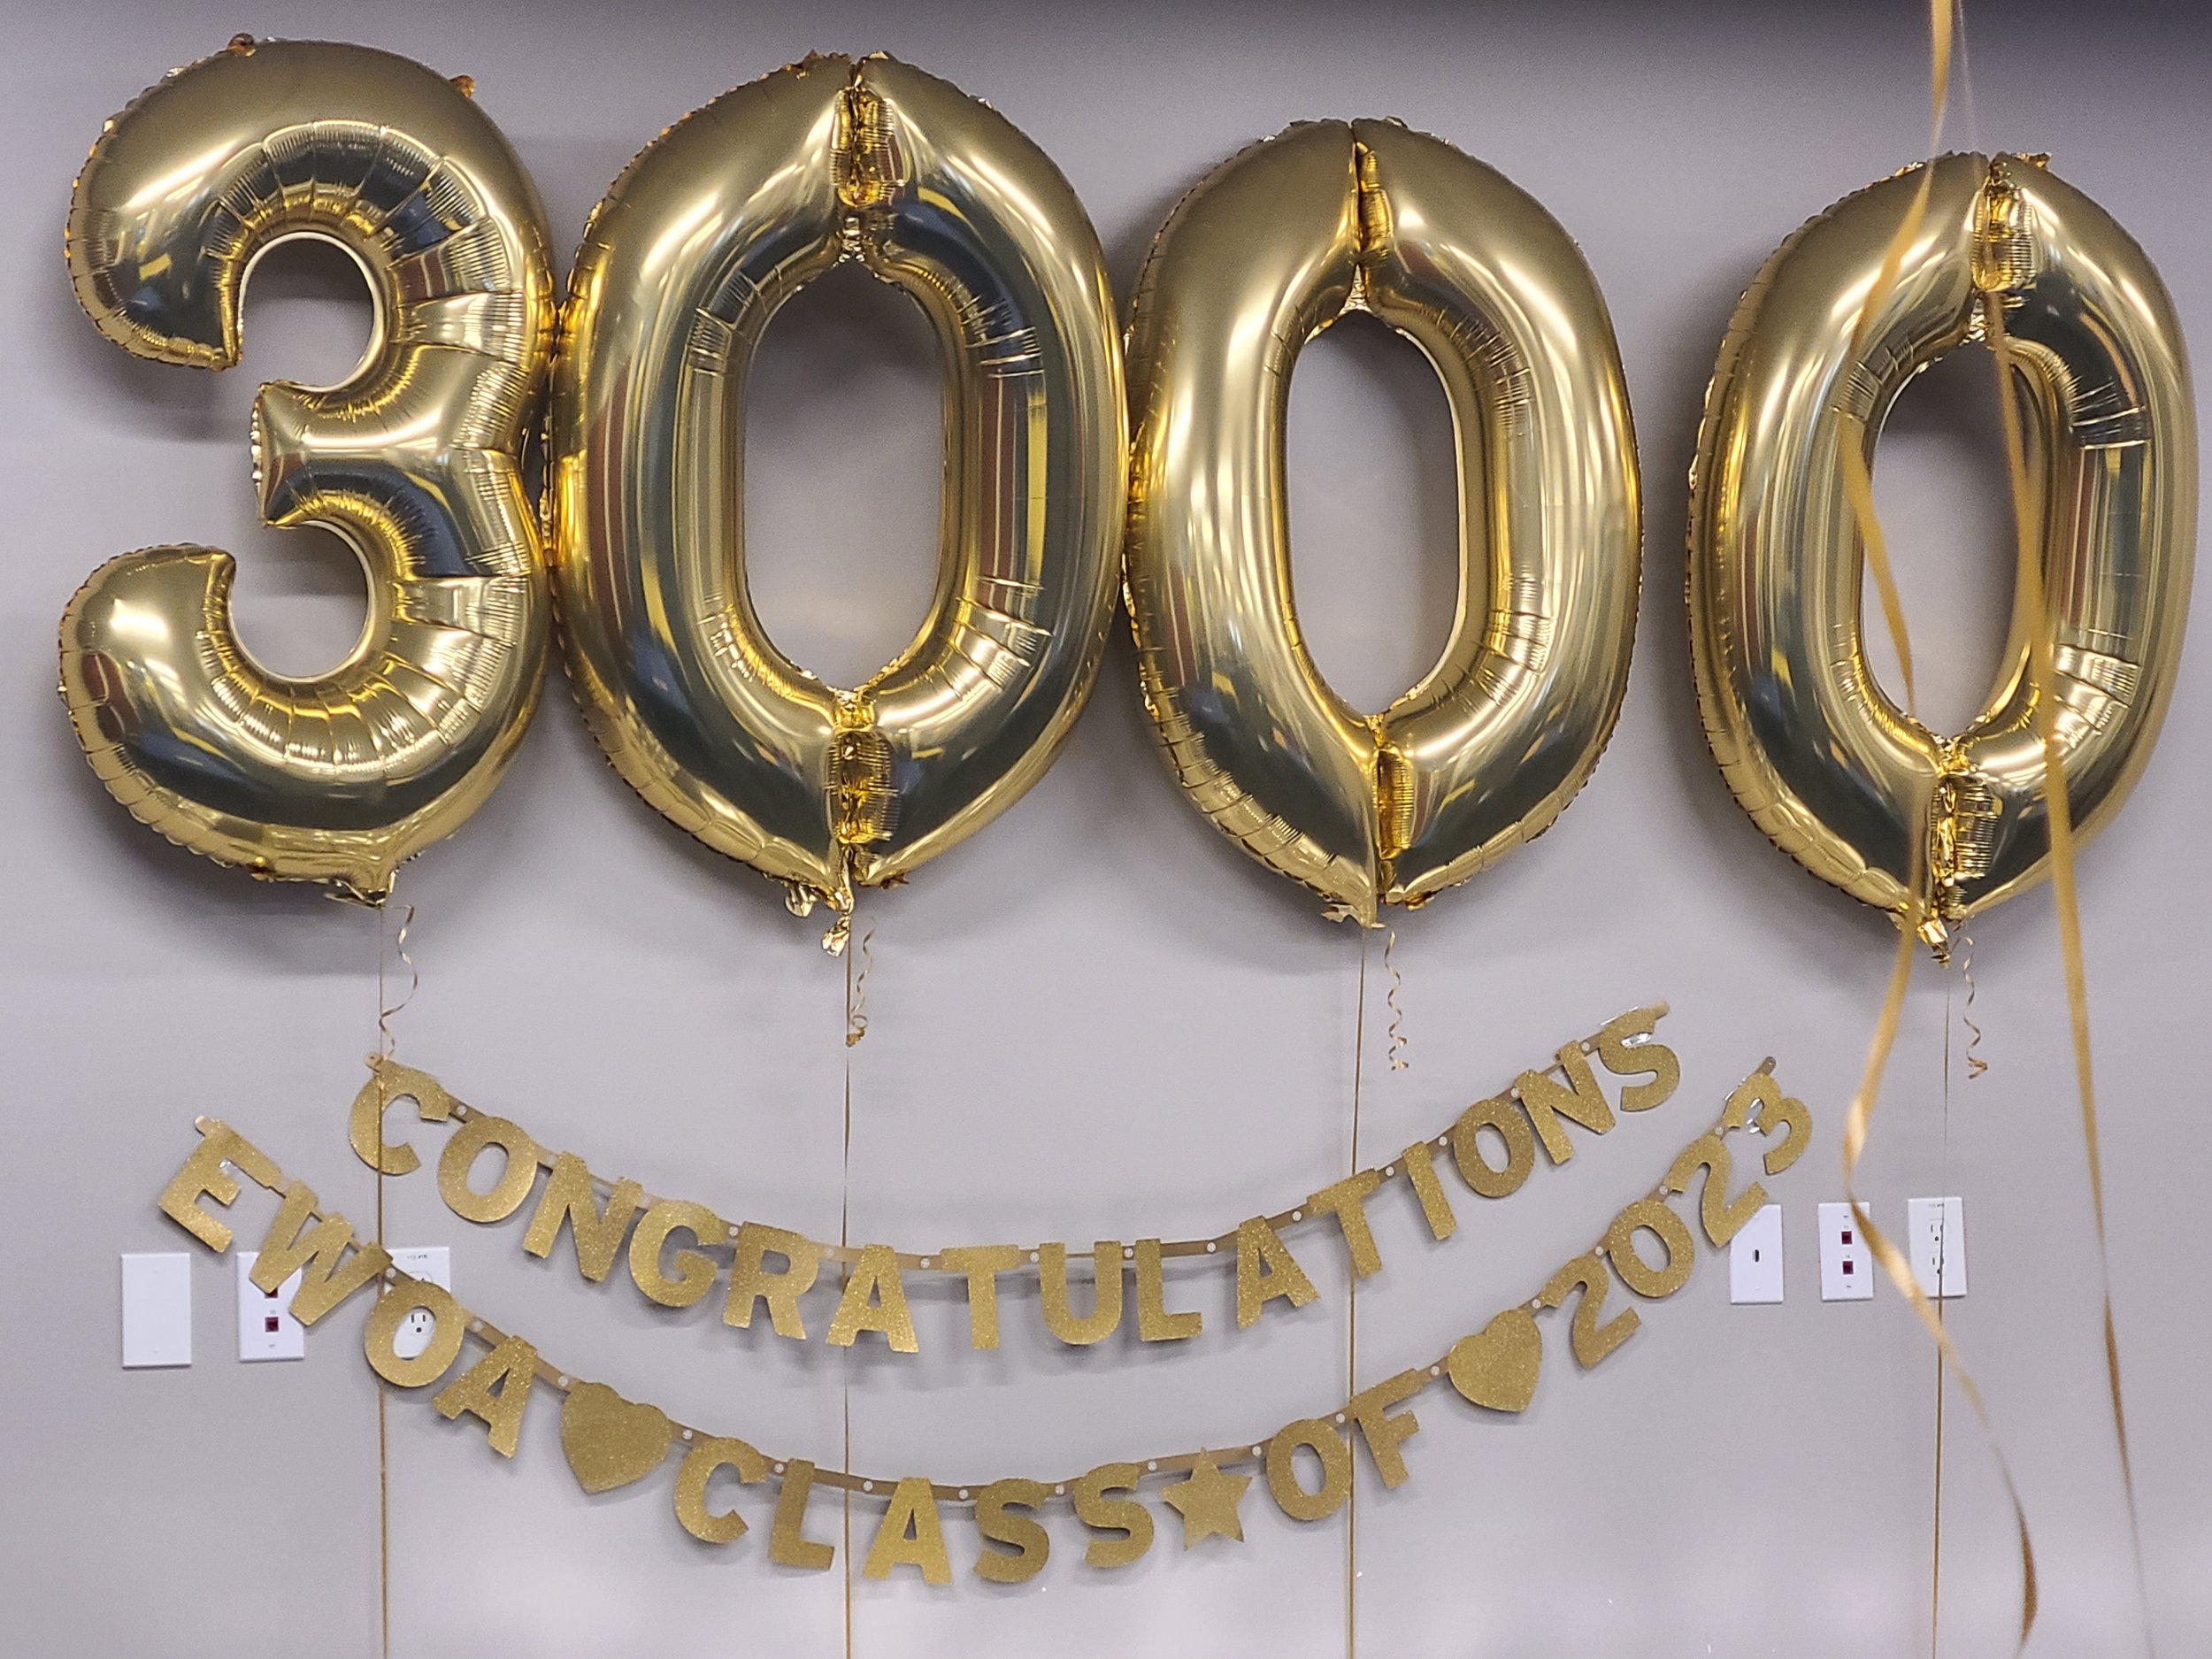 EWOA Graduation Balloons.jpg